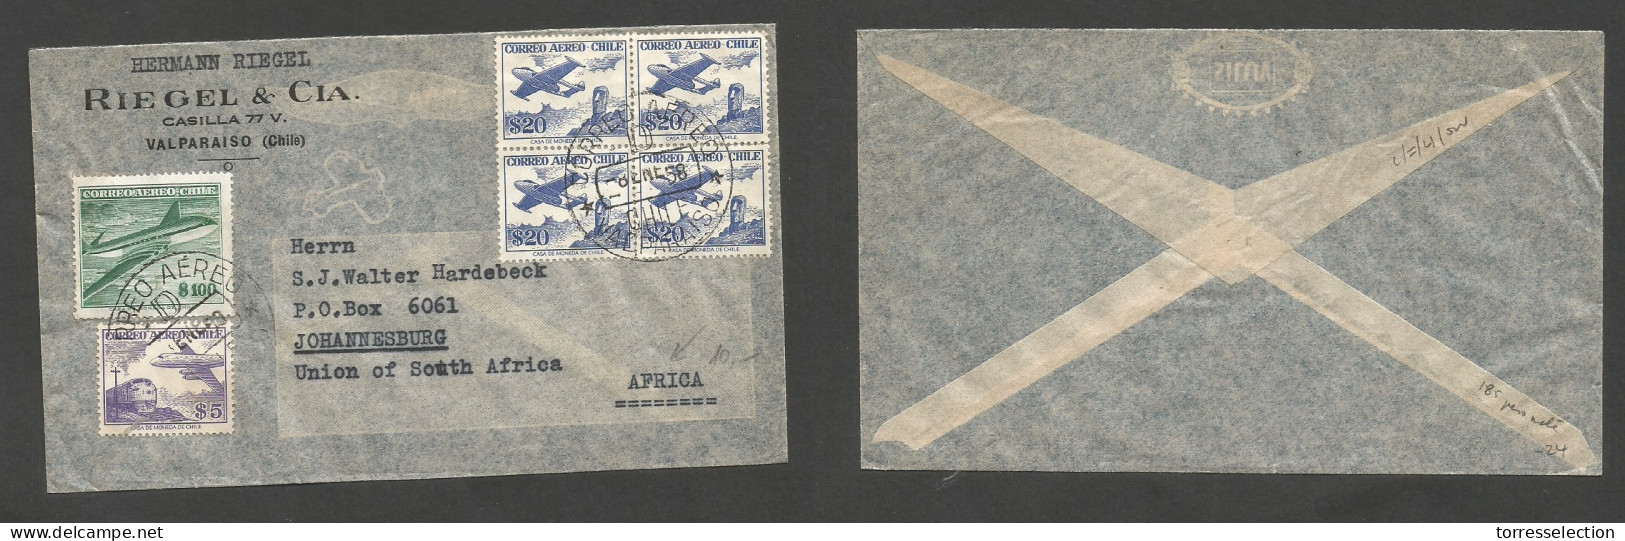 Chile - XX. 1958 (8 Ene) Valp - South Africa, Joburg. Air Multifkd Env At 185 Pesos Rate. Fine + Dest. XSALE. - Chili